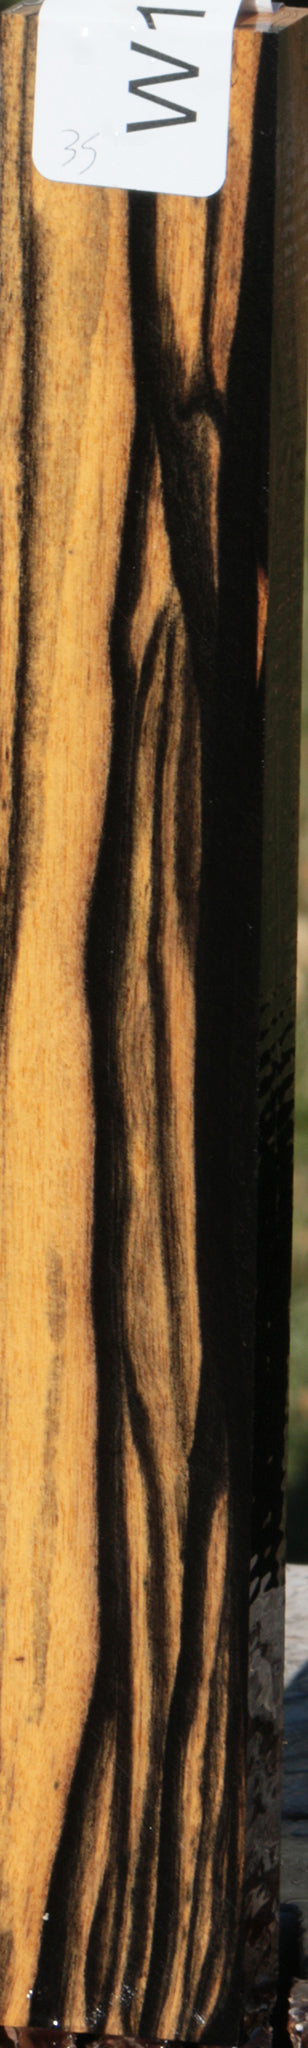 Black & White Ebony Micro Lumber